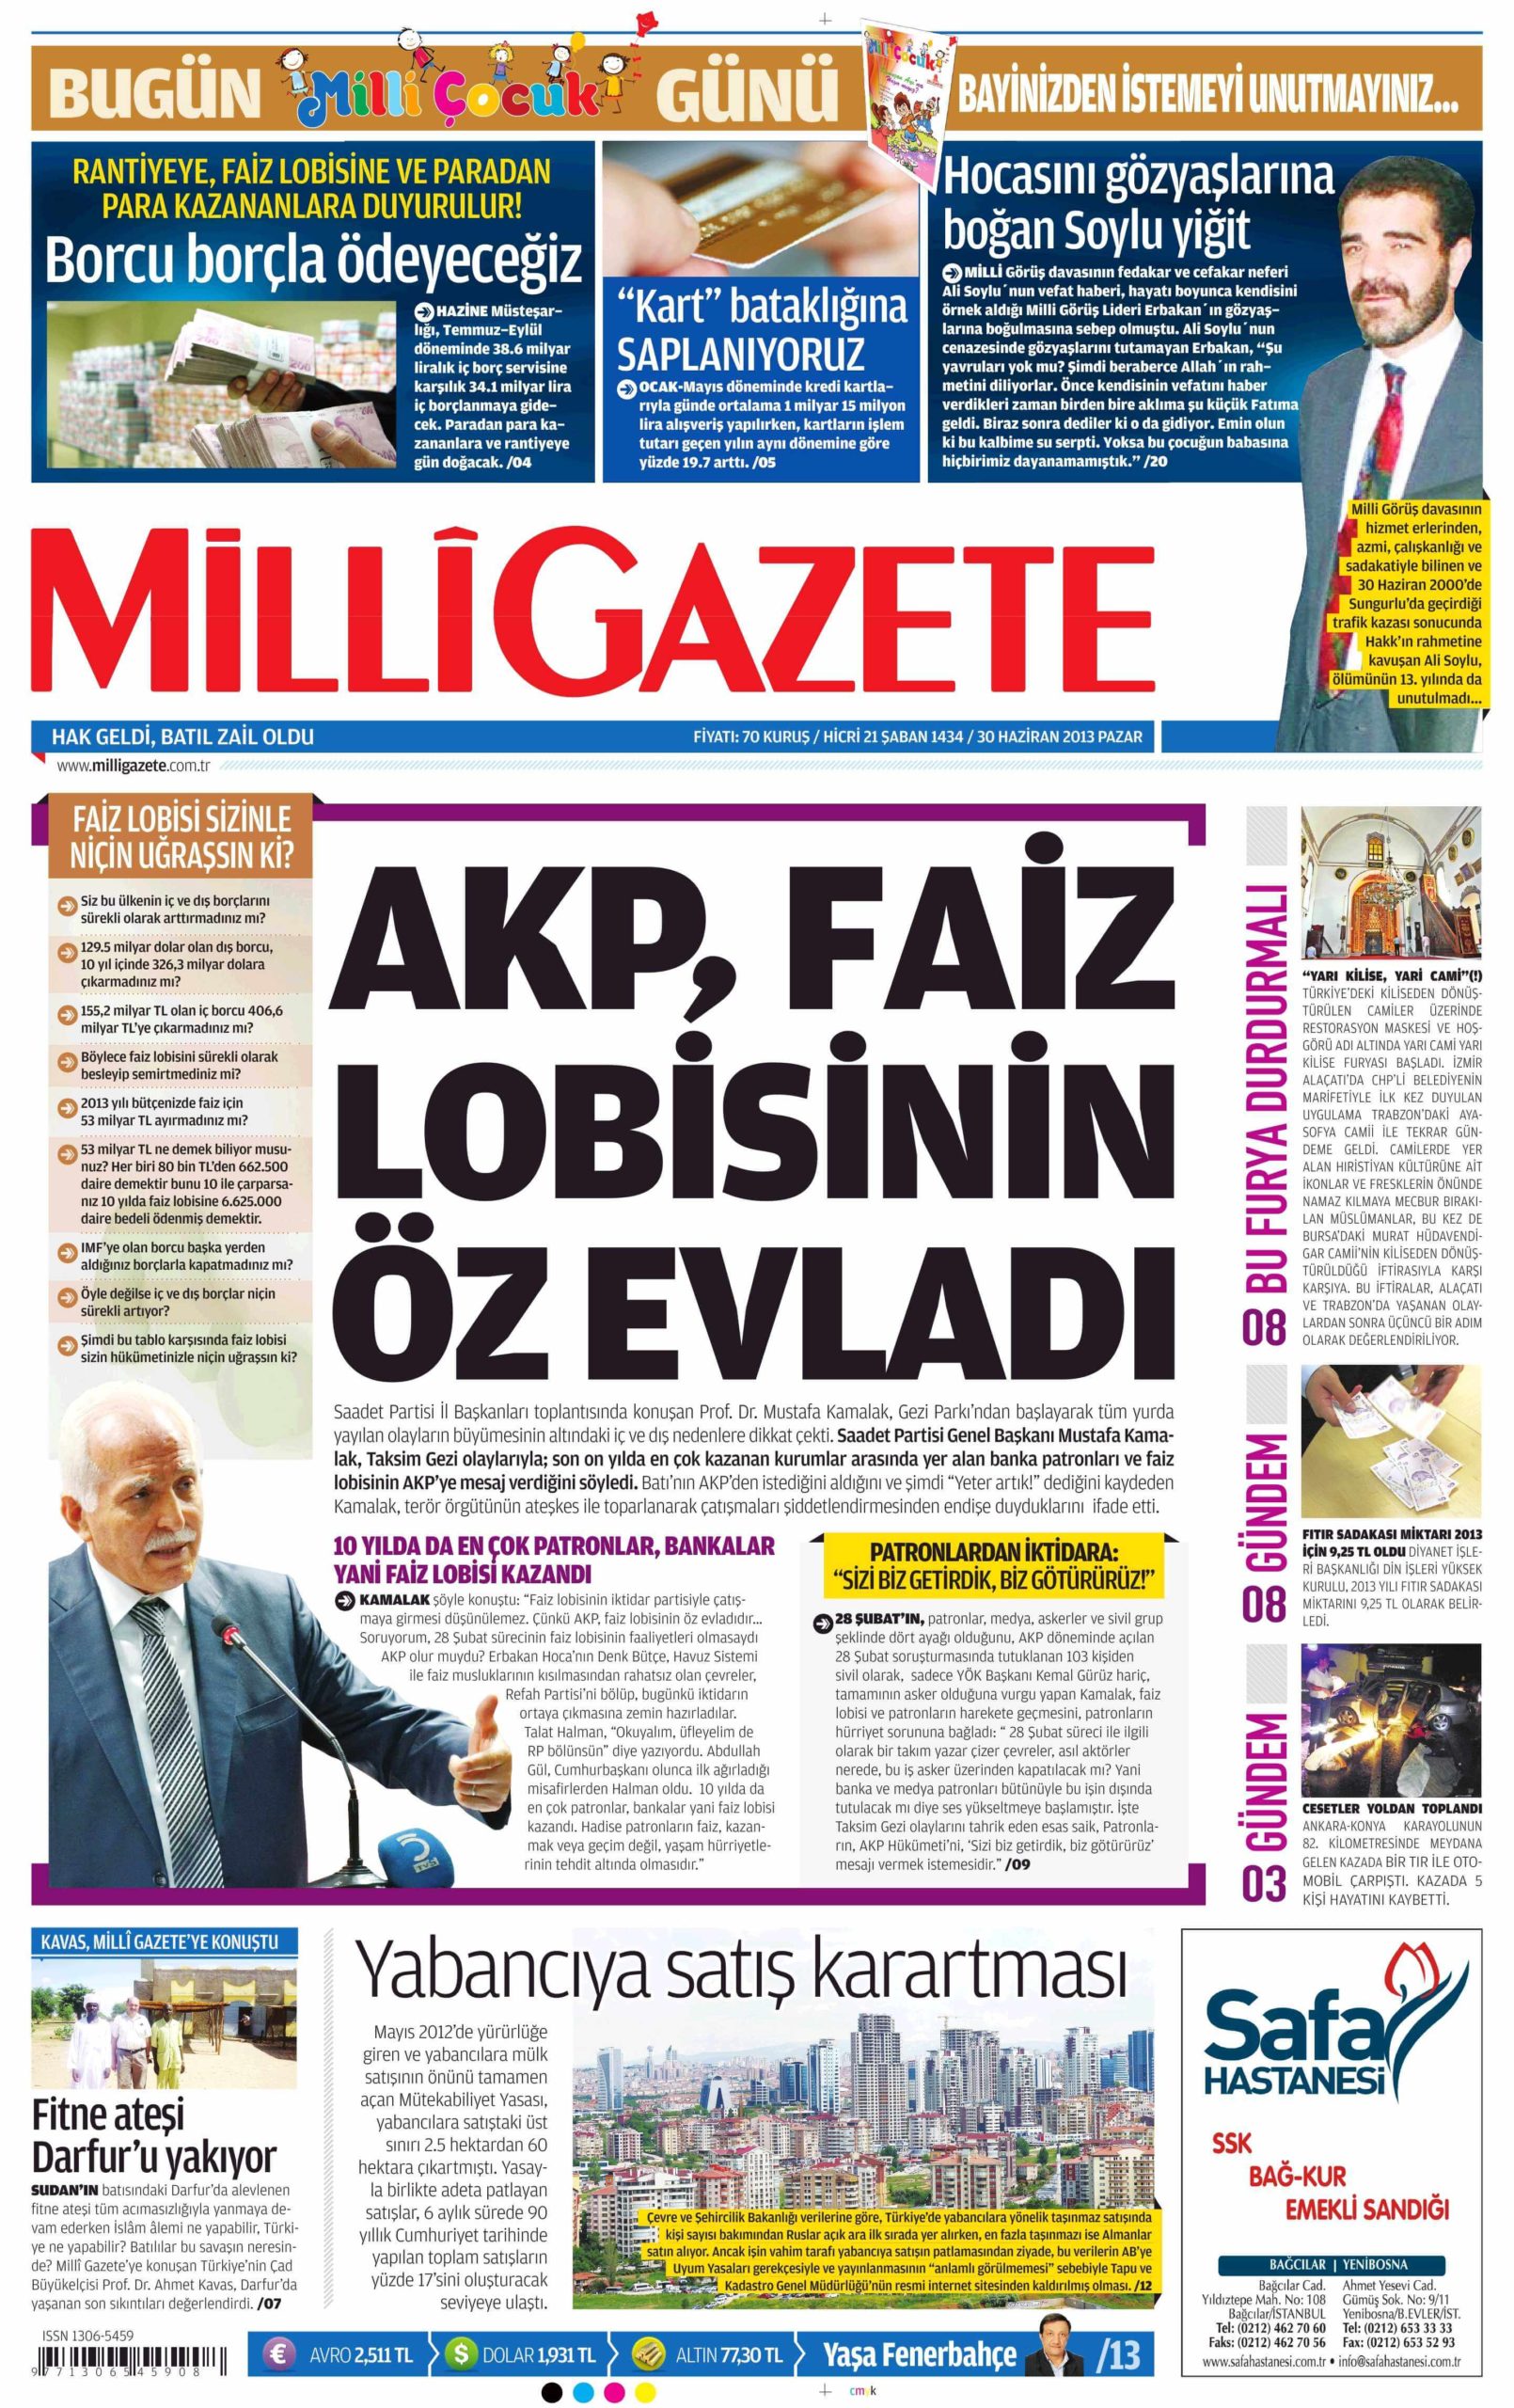 Turkish Newspapers 33 Milli Gazete scaled